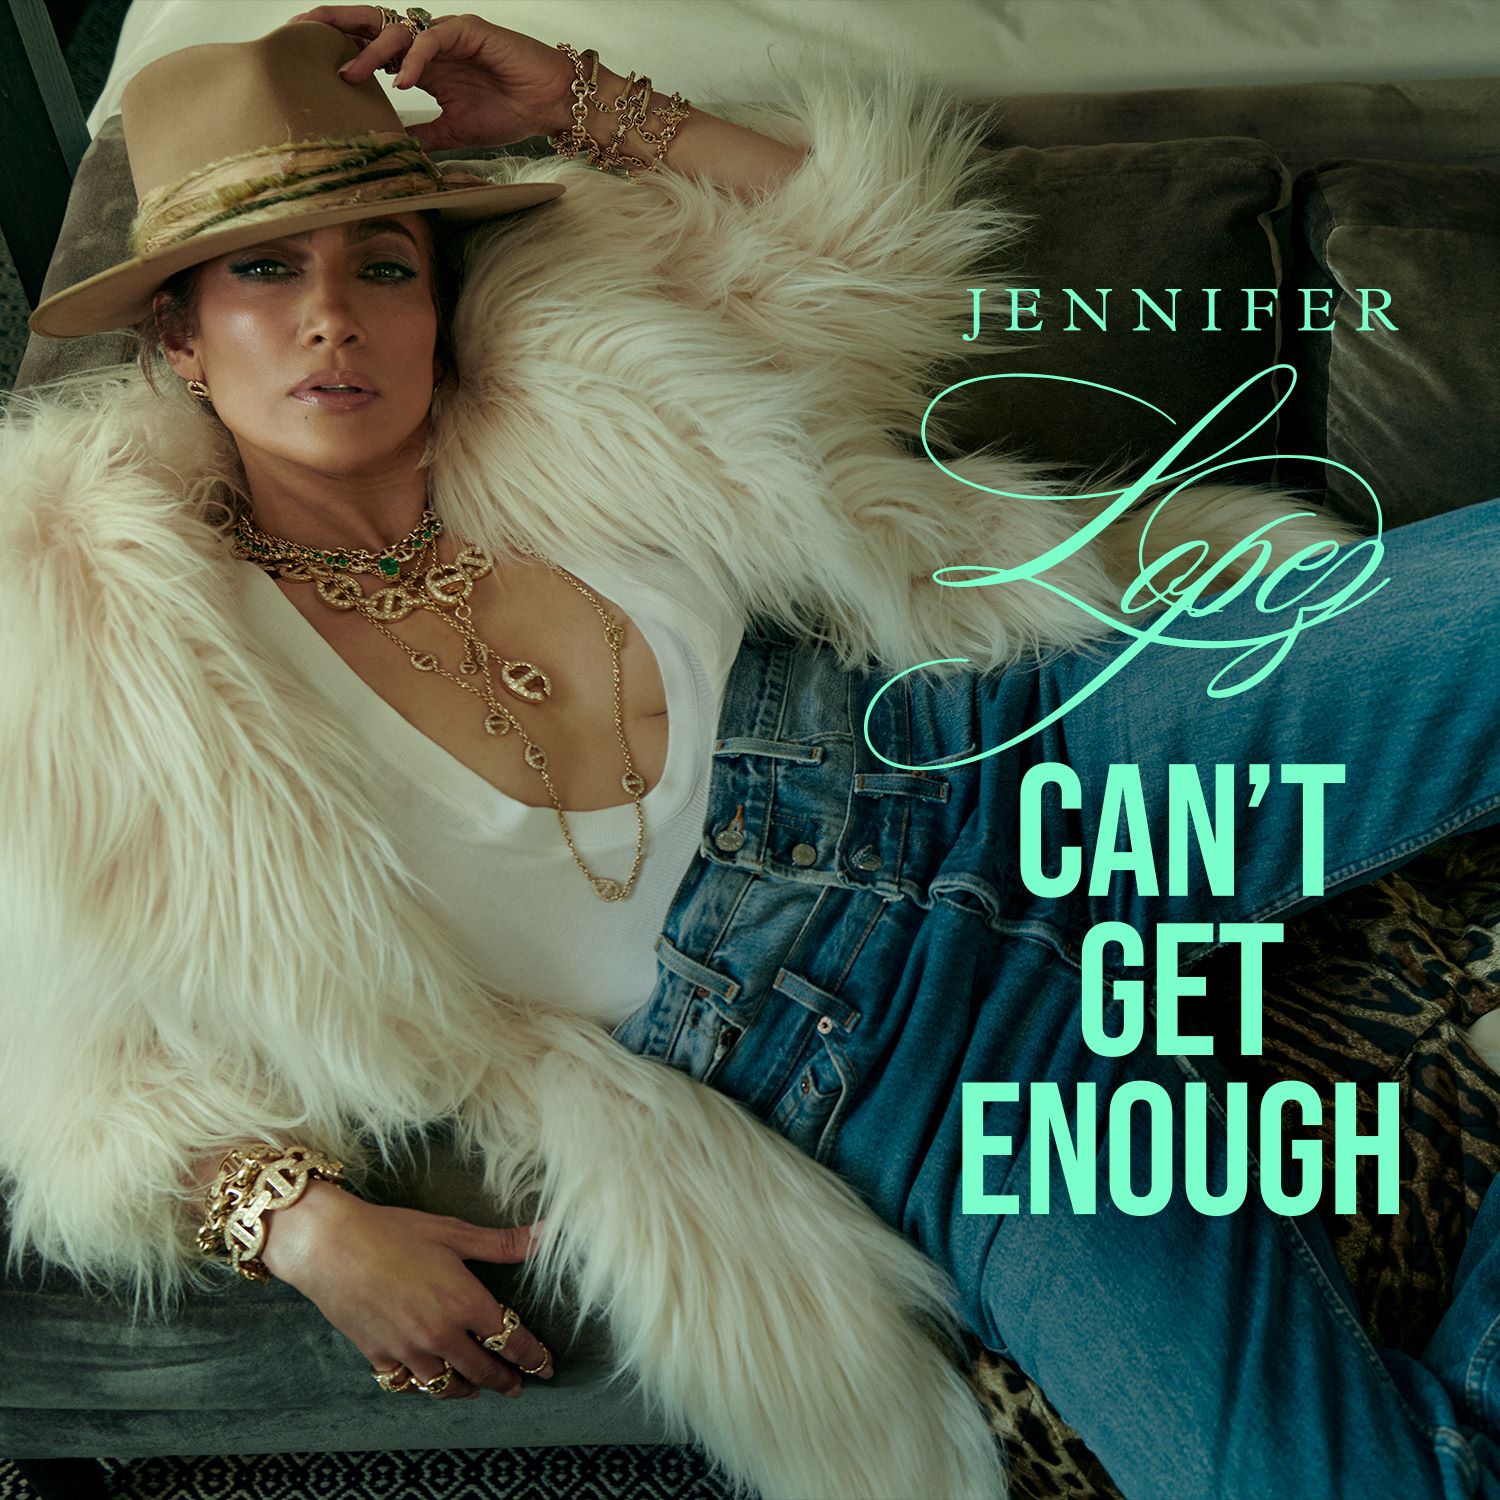 Can’t Get Enough, nuovo singolo di Jennifer Lopez